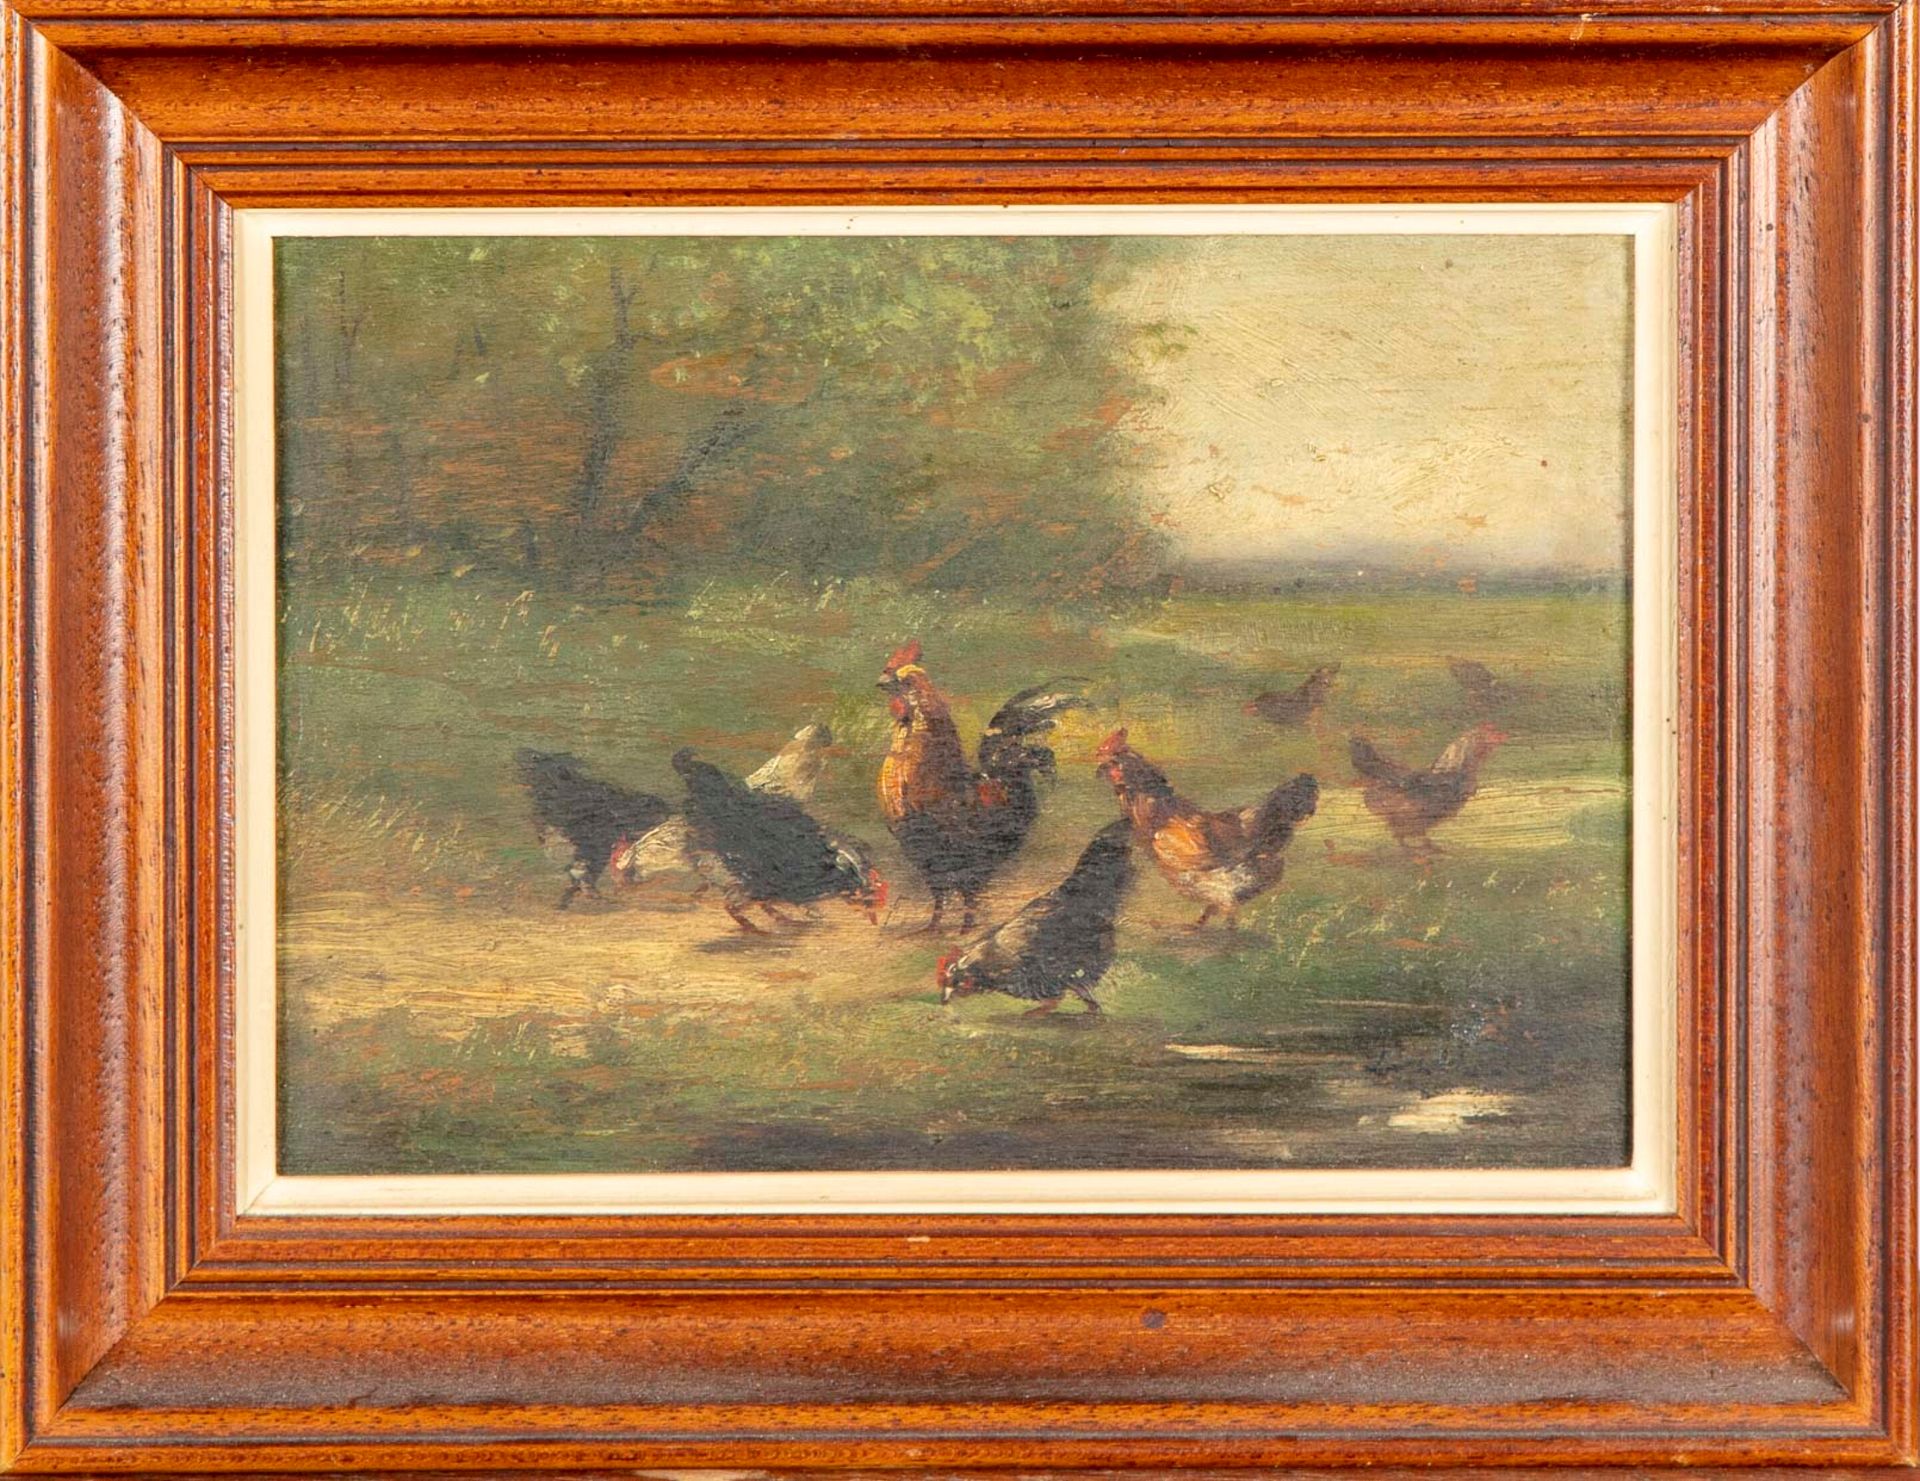 DUBOIS DUBOIS (第二十次)

母鸡

一对油画板

右下方有签名

14,5 x 21 cm